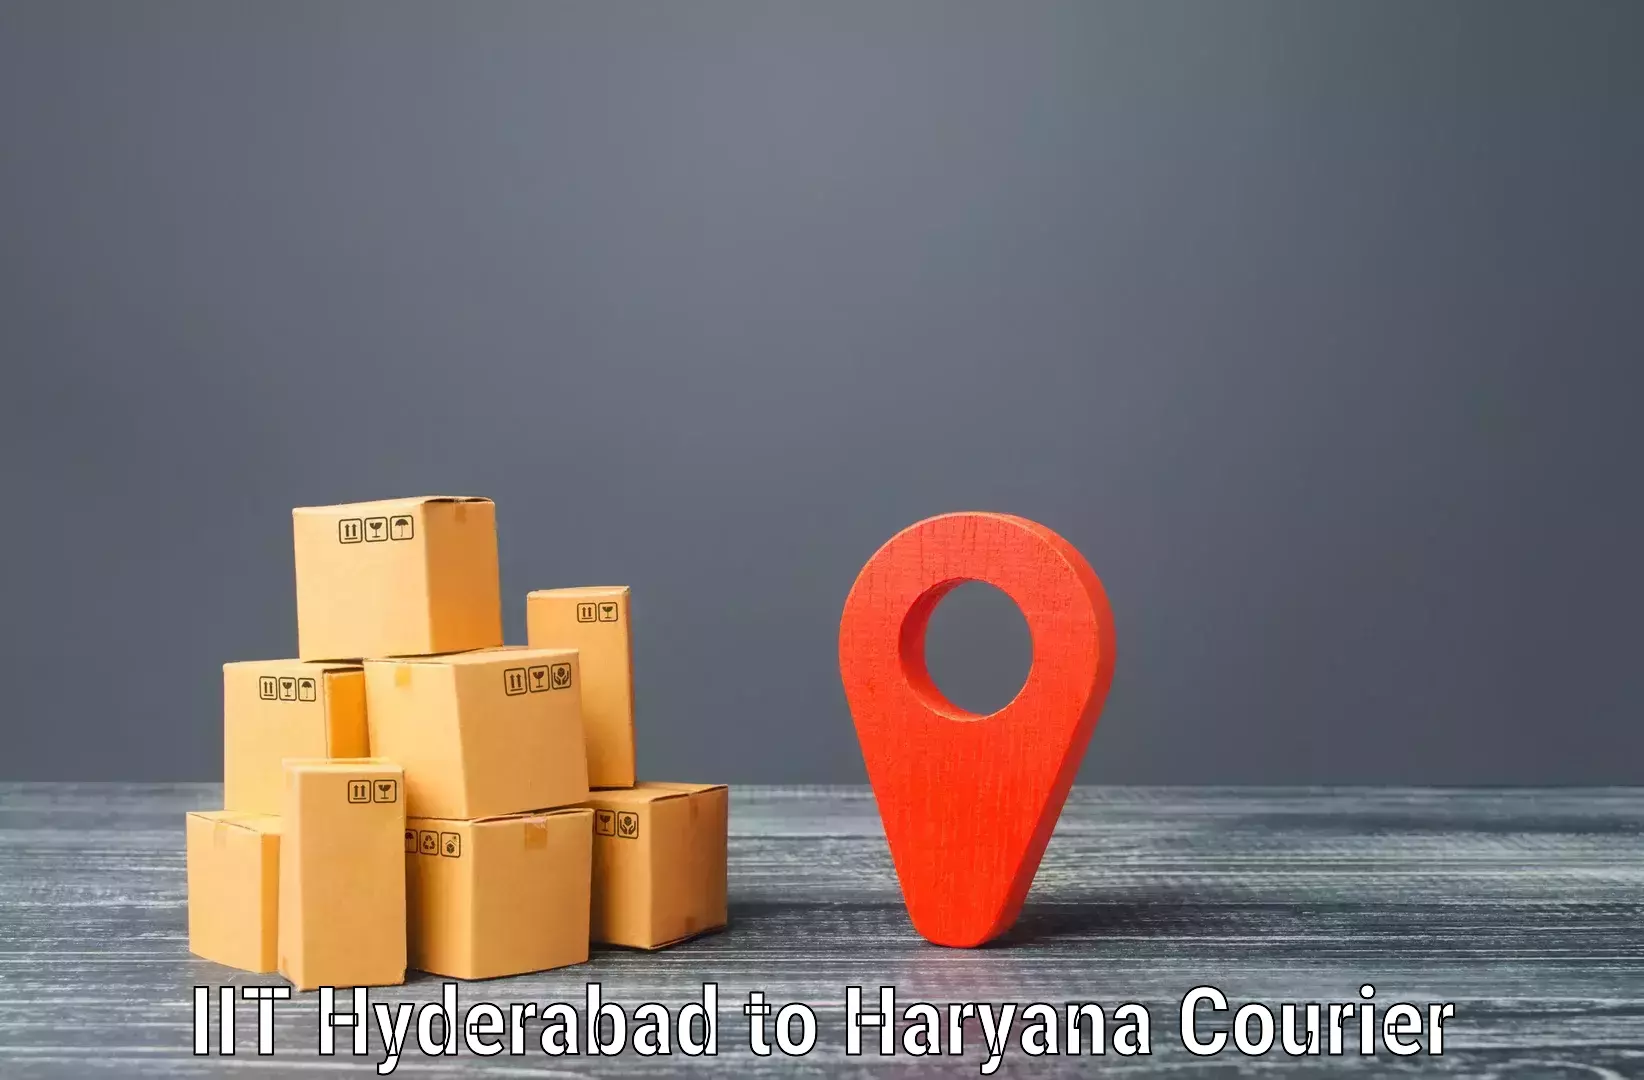 Express package handling IIT Hyderabad to Panchkula